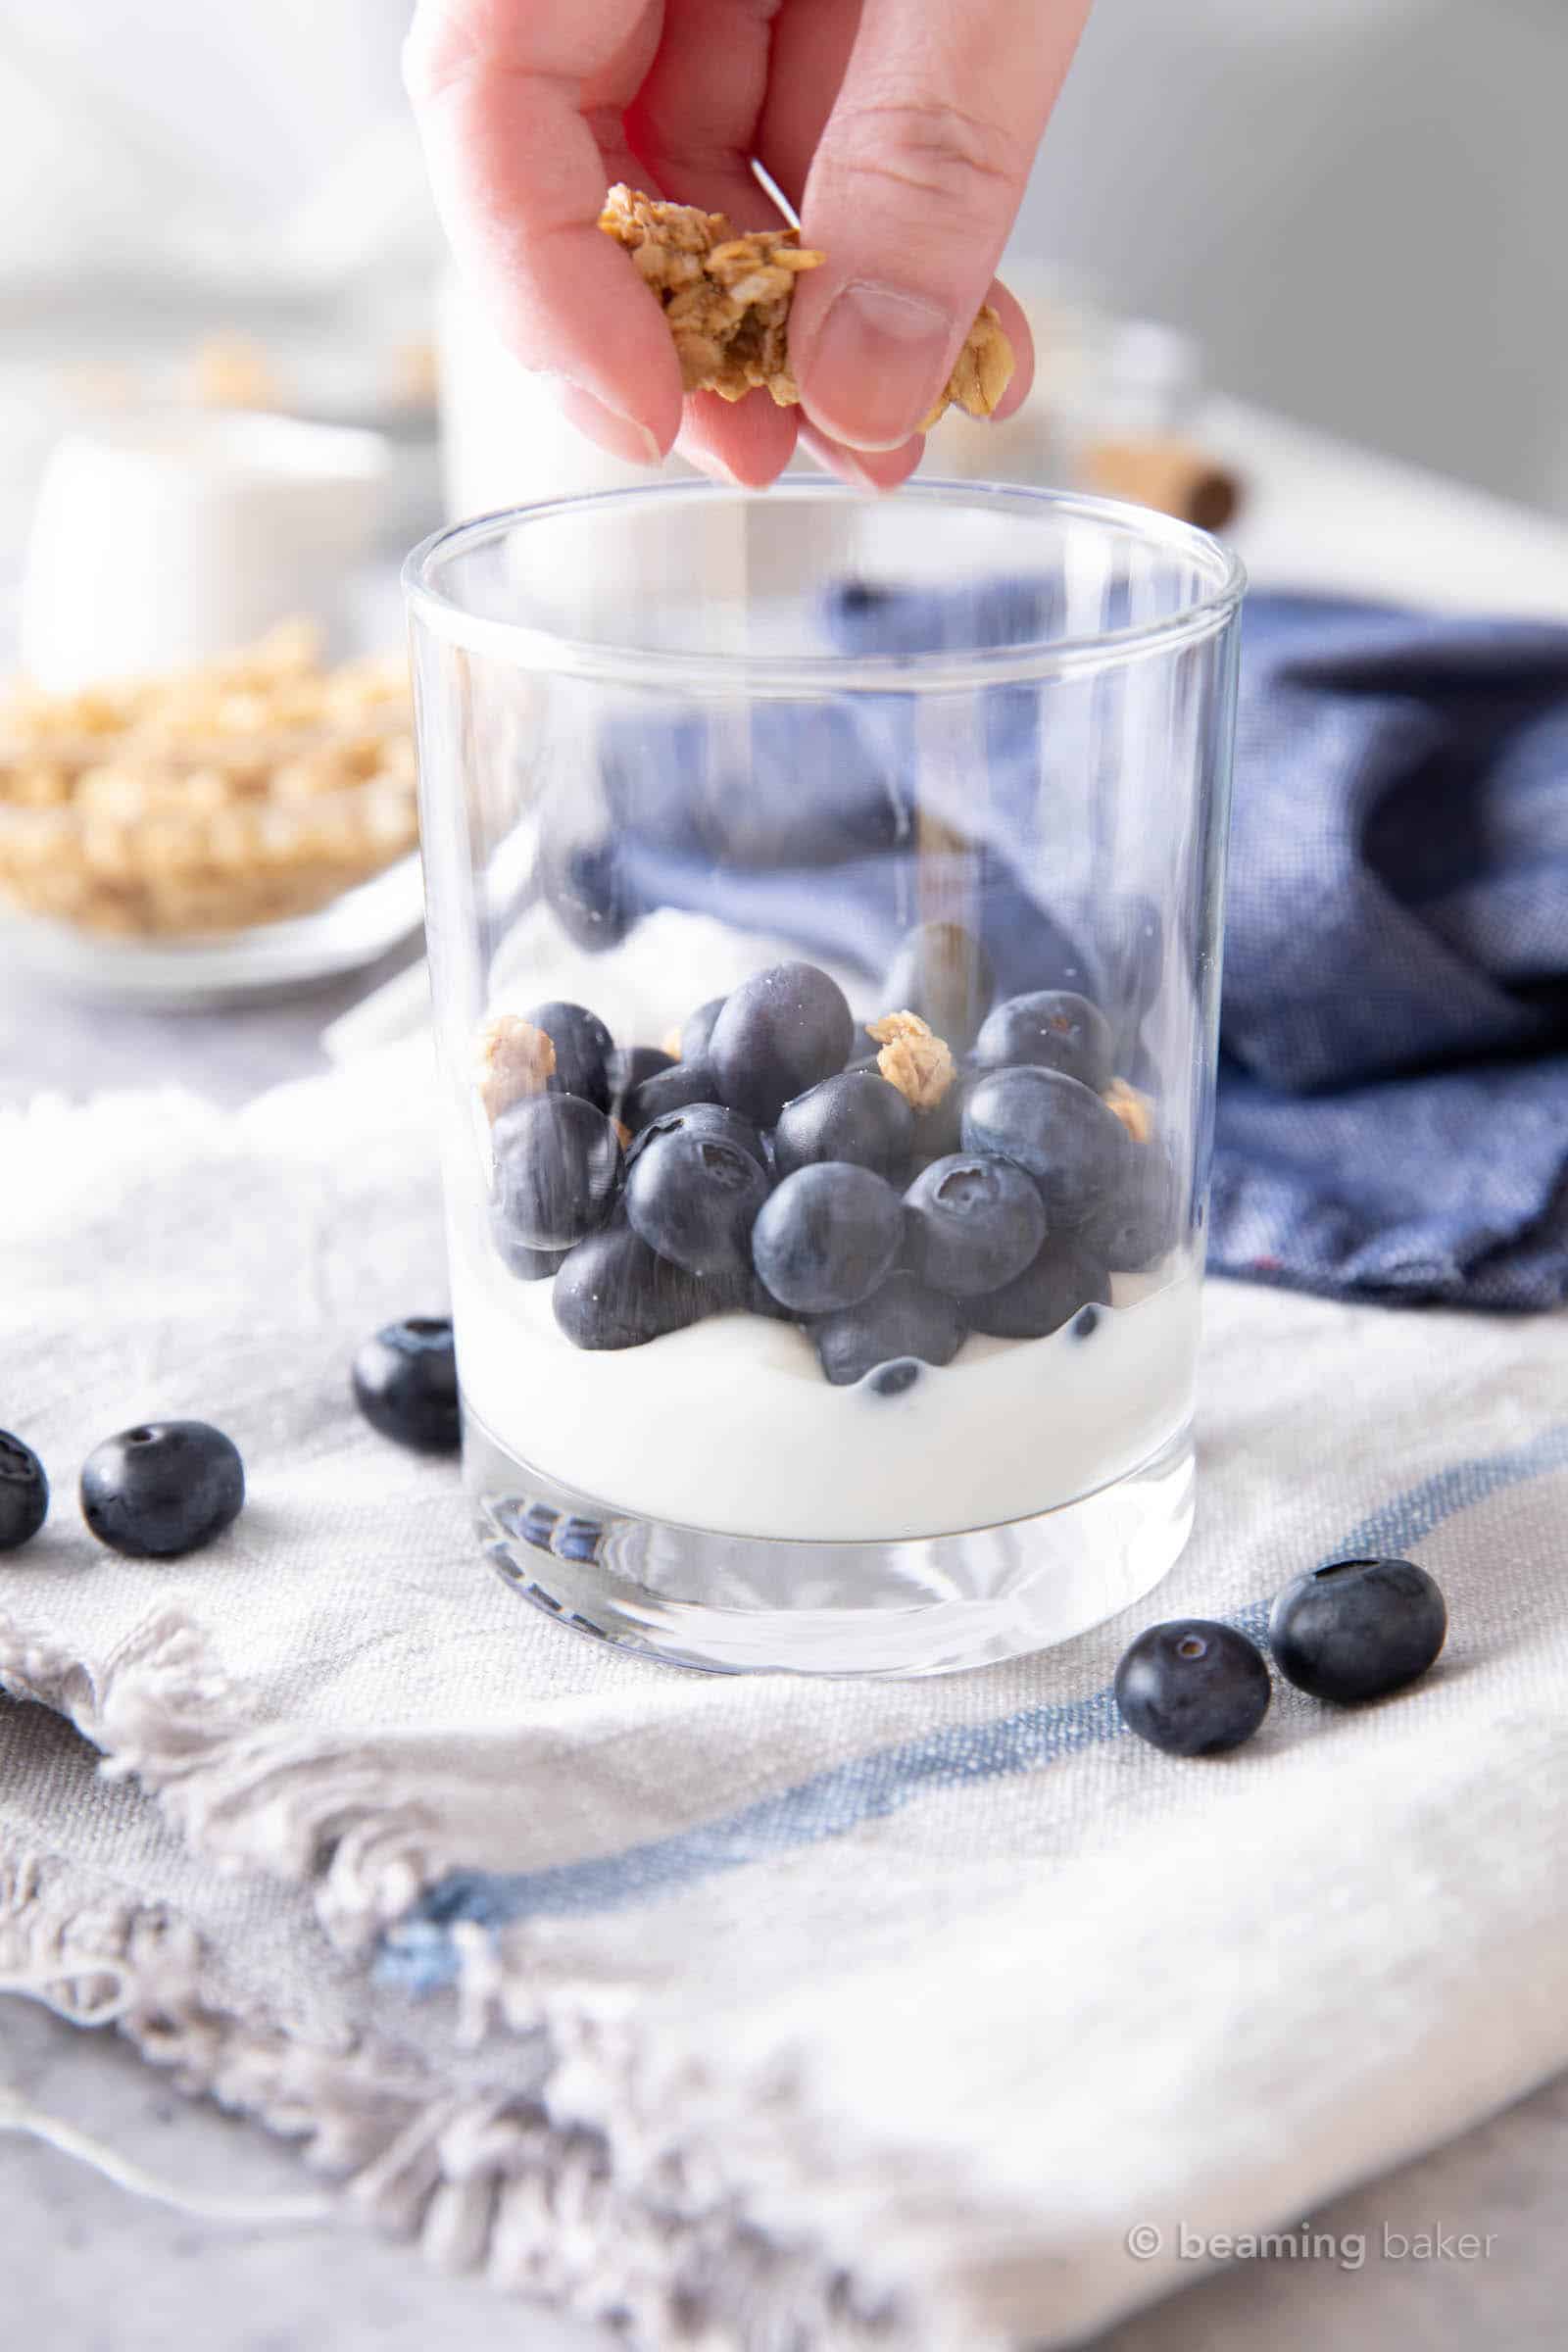 Hand sprinkling granola over blueberry layer in blueberry yogurt parfait